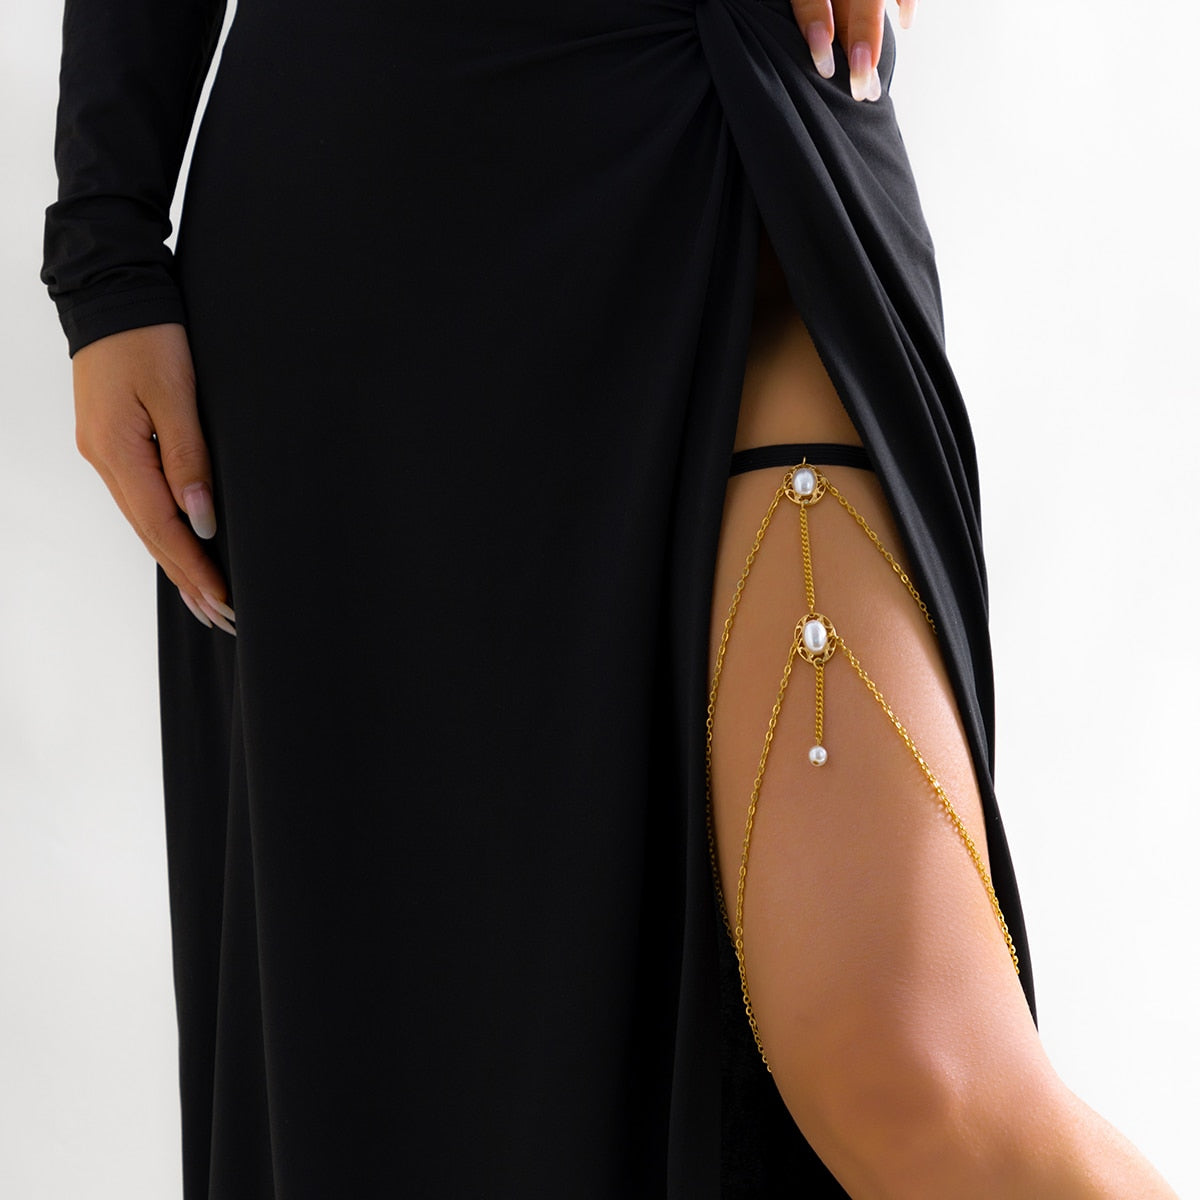 Maytrends Sexy Imitation Pearl Pendant Multi-layer Metal Thigh Chain Fashion Black Elastic Leg Chain Bikini Beach Body Jewelry